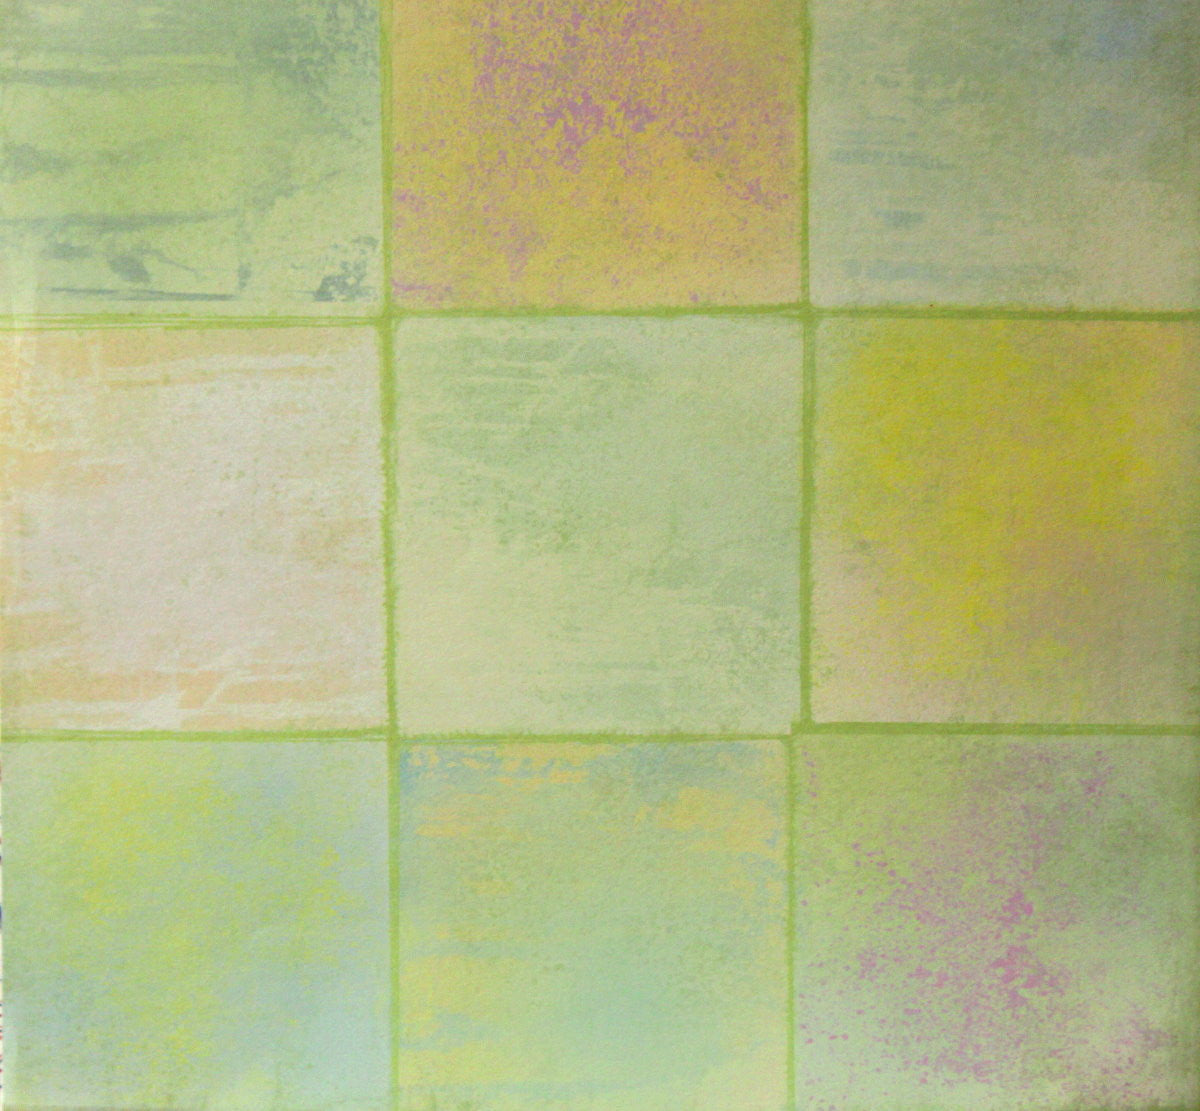 Pastel Blocks Coordinates Printed 12 x 12 Scrapbook Paper - SCRAPBOOKFARE